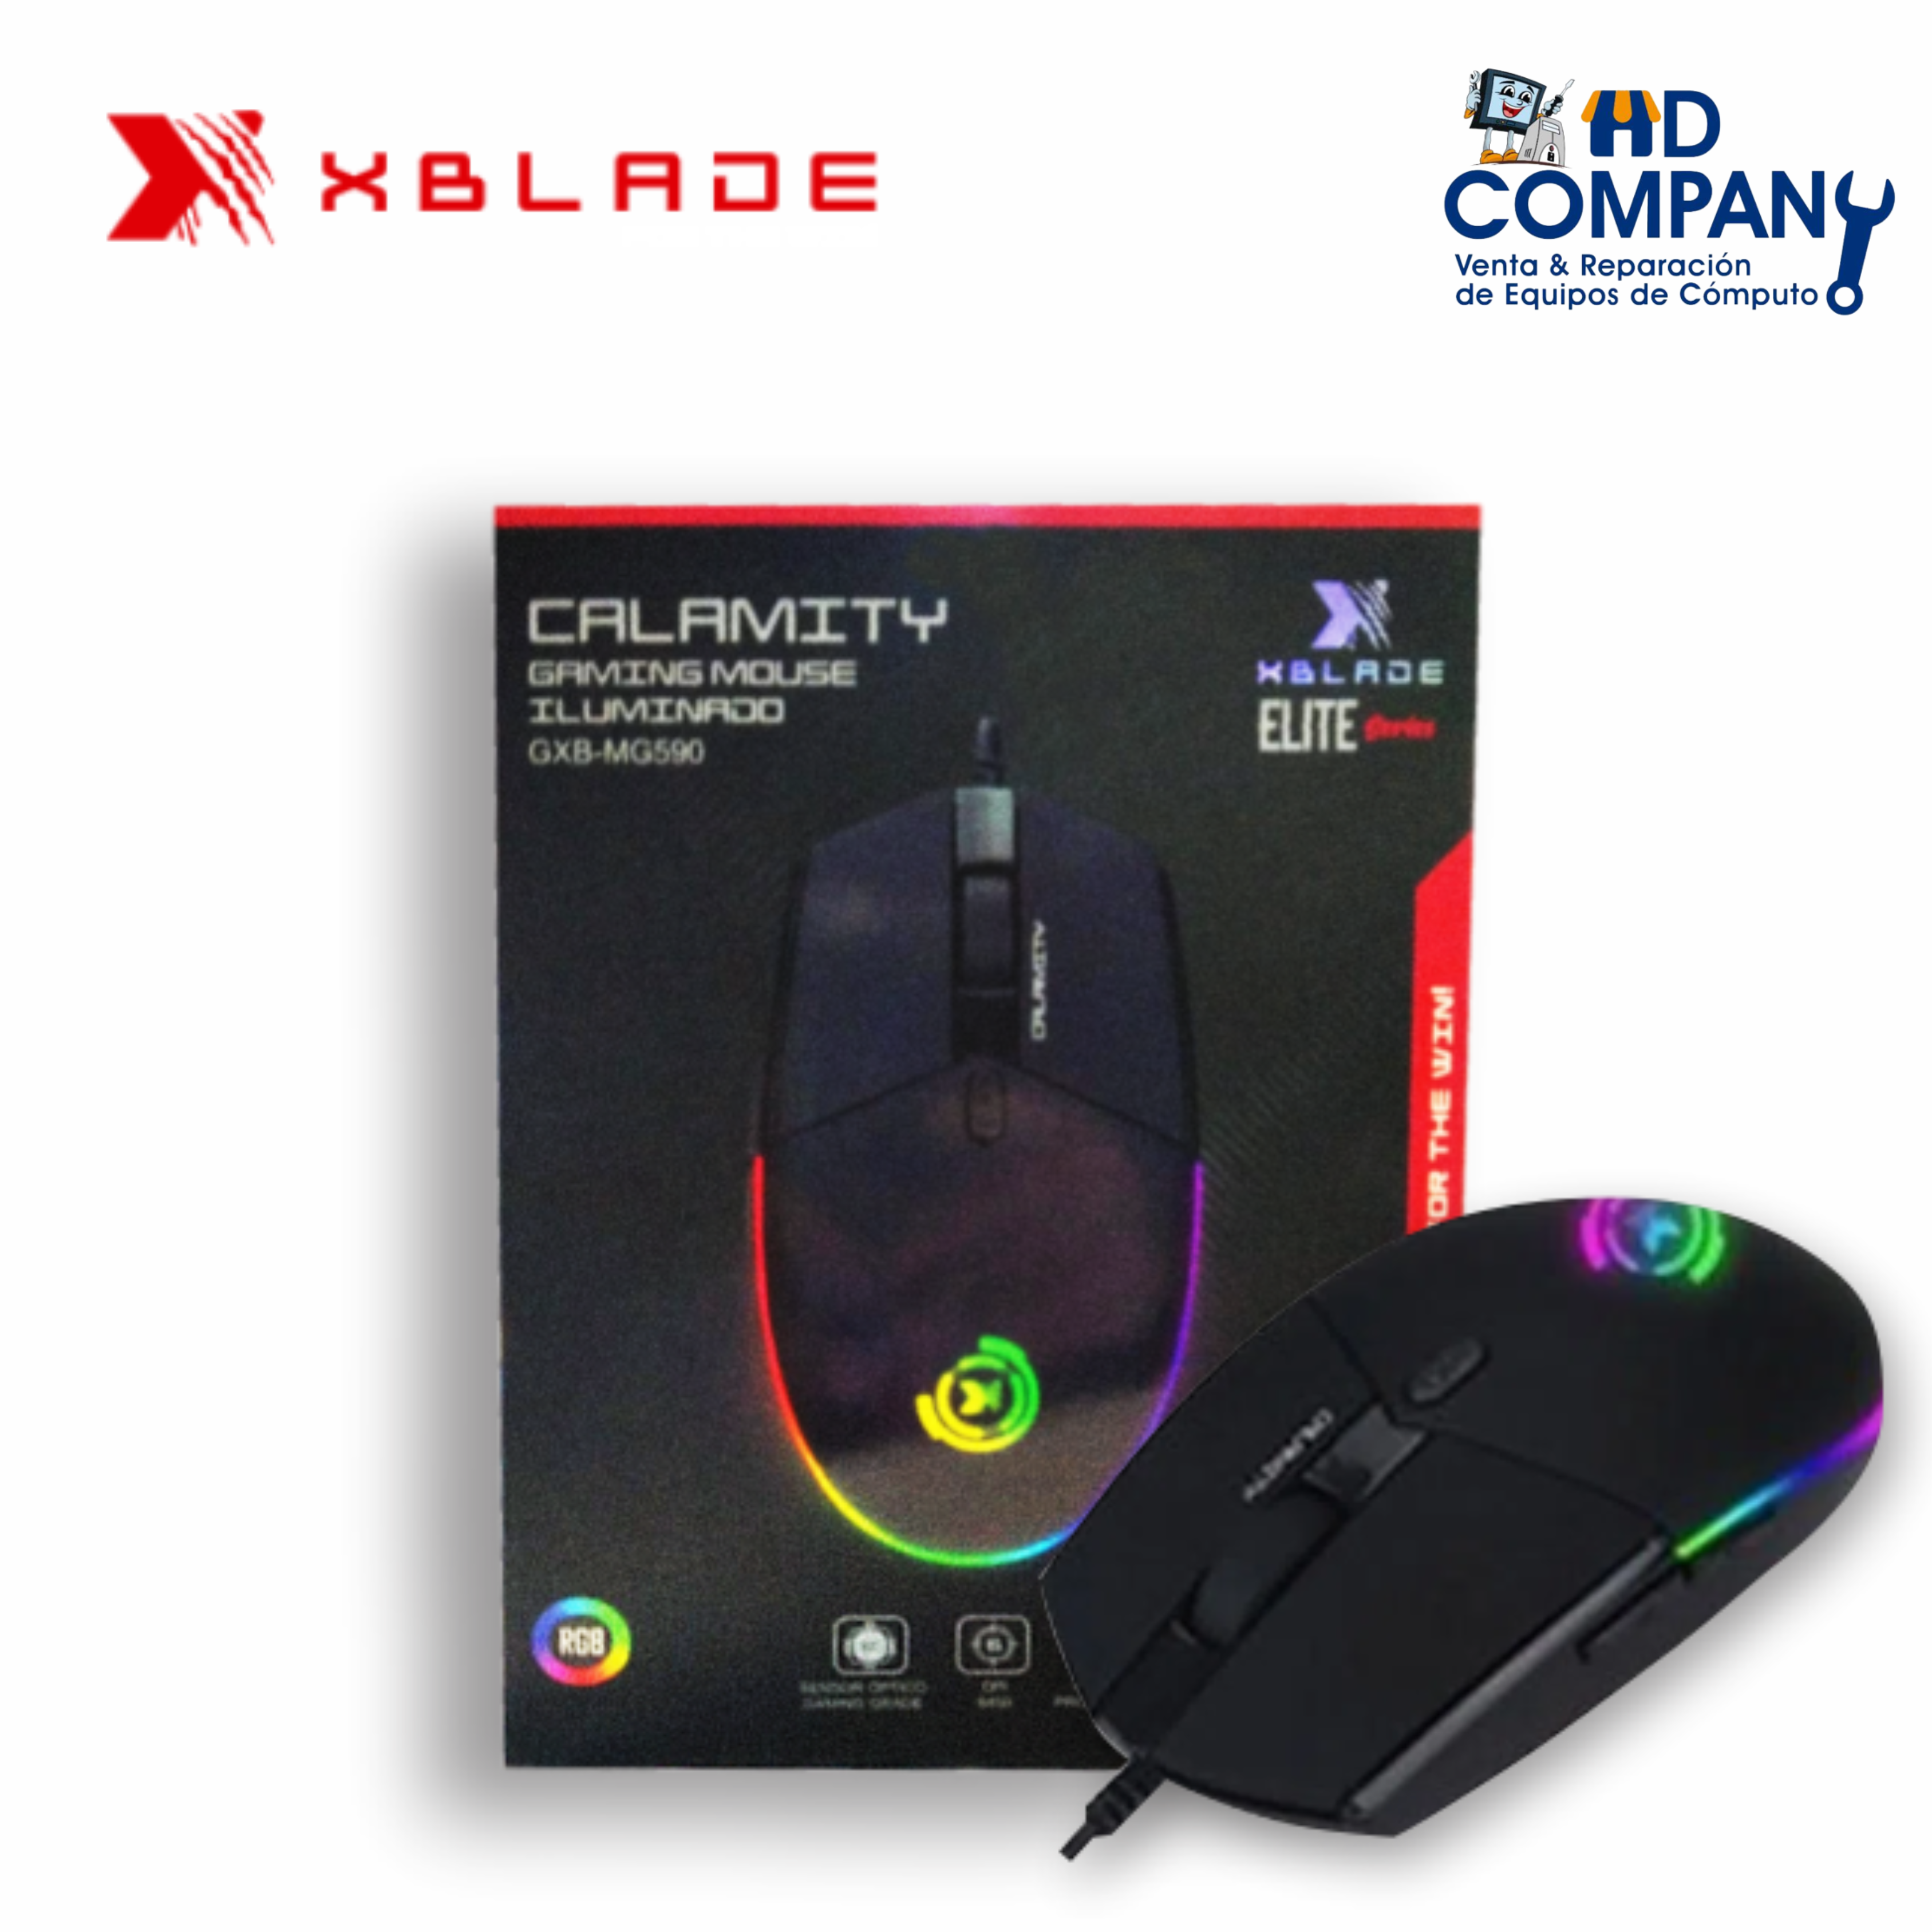 Mouse XBLADE ELITE CALAMITY gamer 6400 DPI RGB BLACK 6 BOTONES GXB-MG590